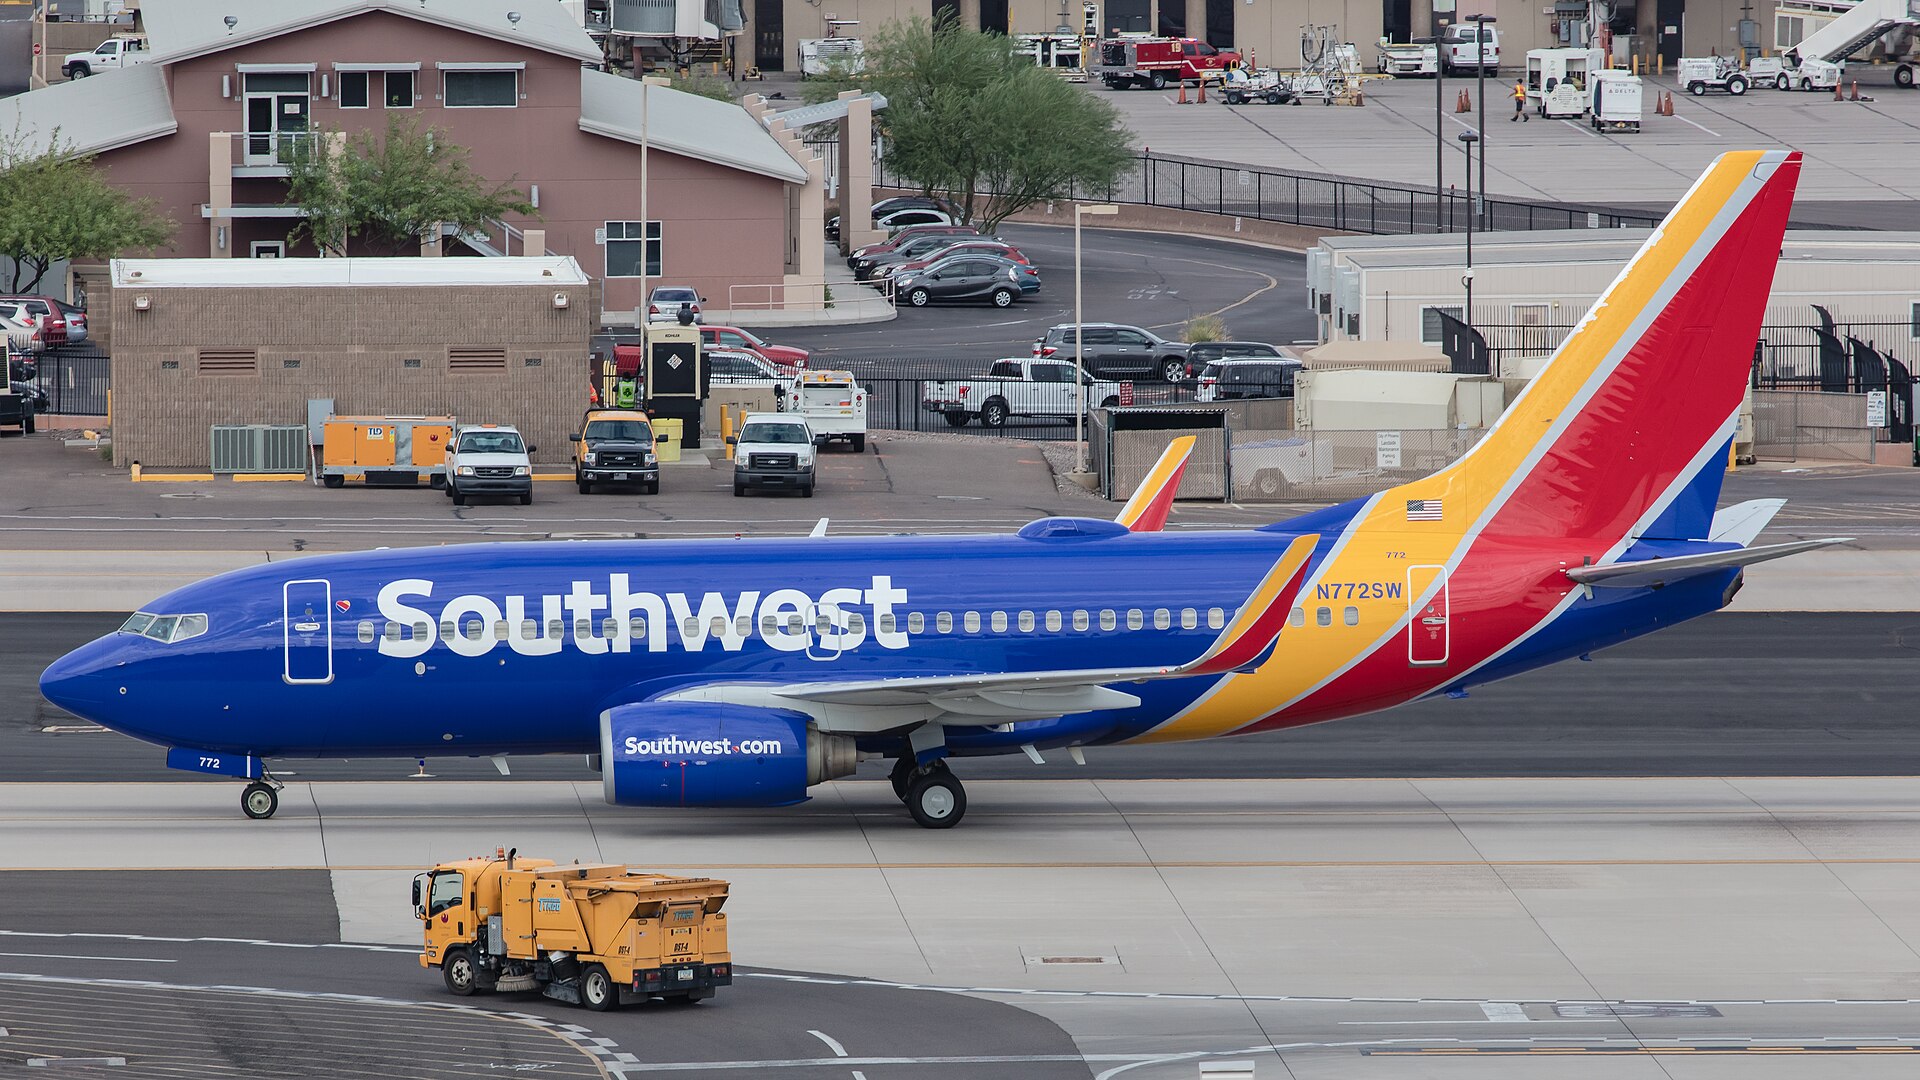 Southwest Airlines 737-700 N772SW at Phoenix Sky Harbor International Airport